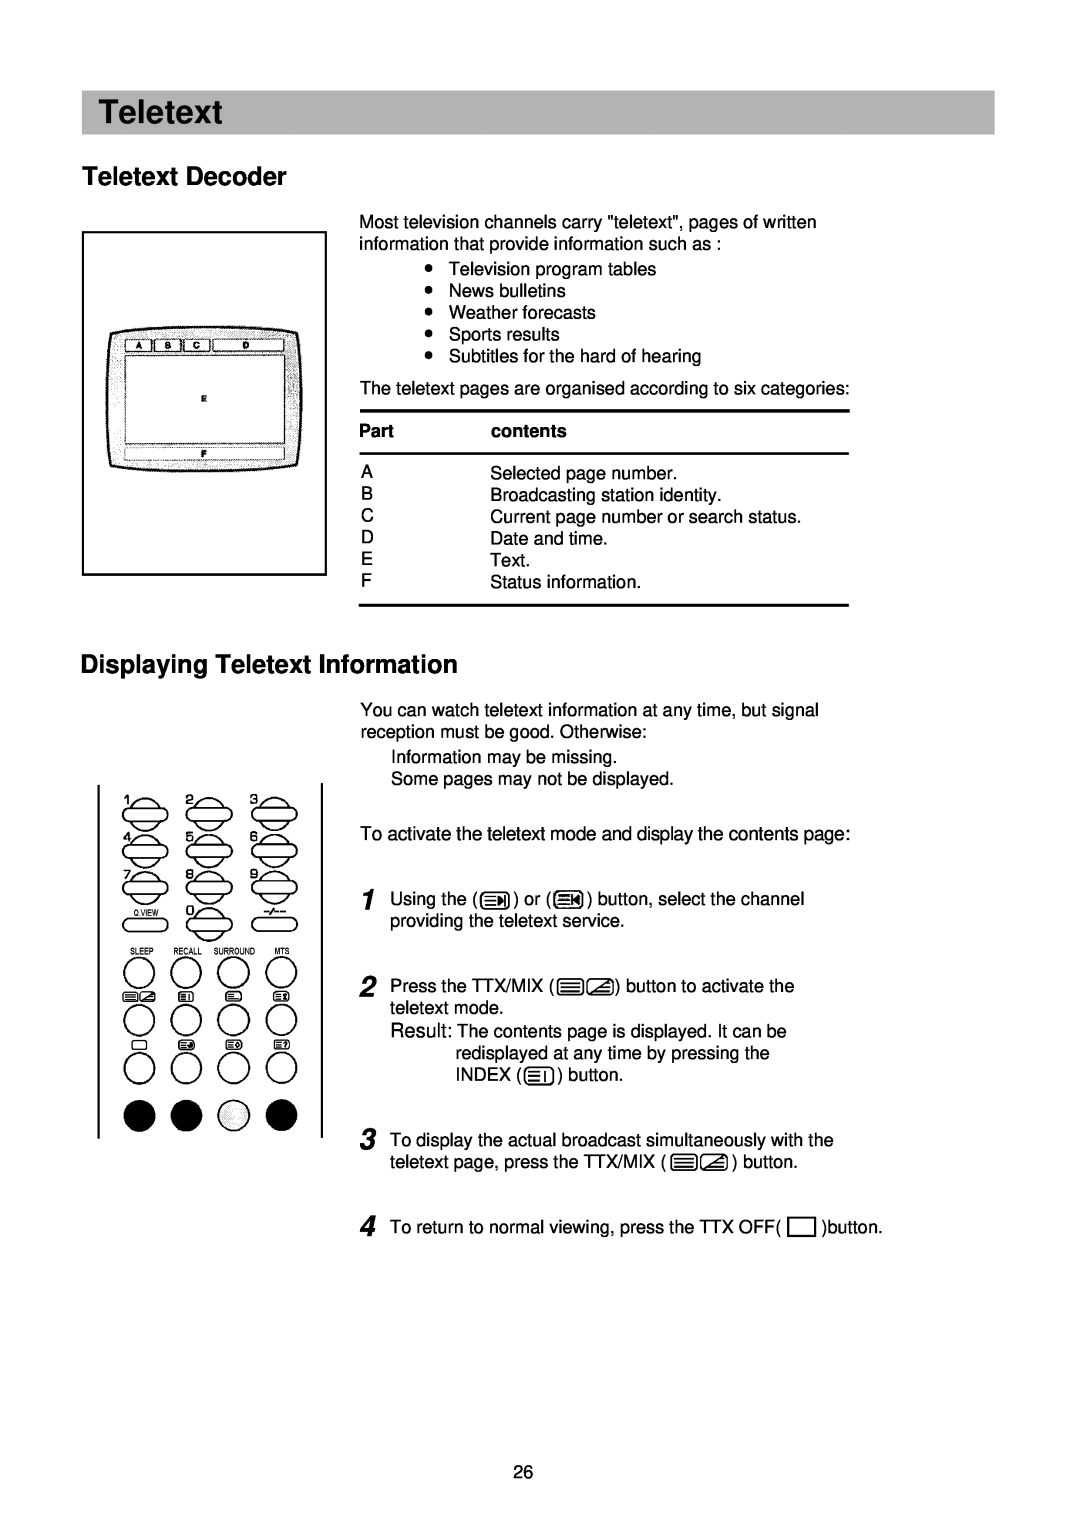 Palsonic TFTV-201 owner manual Teletext Decoder, Displaying Teletext Information 